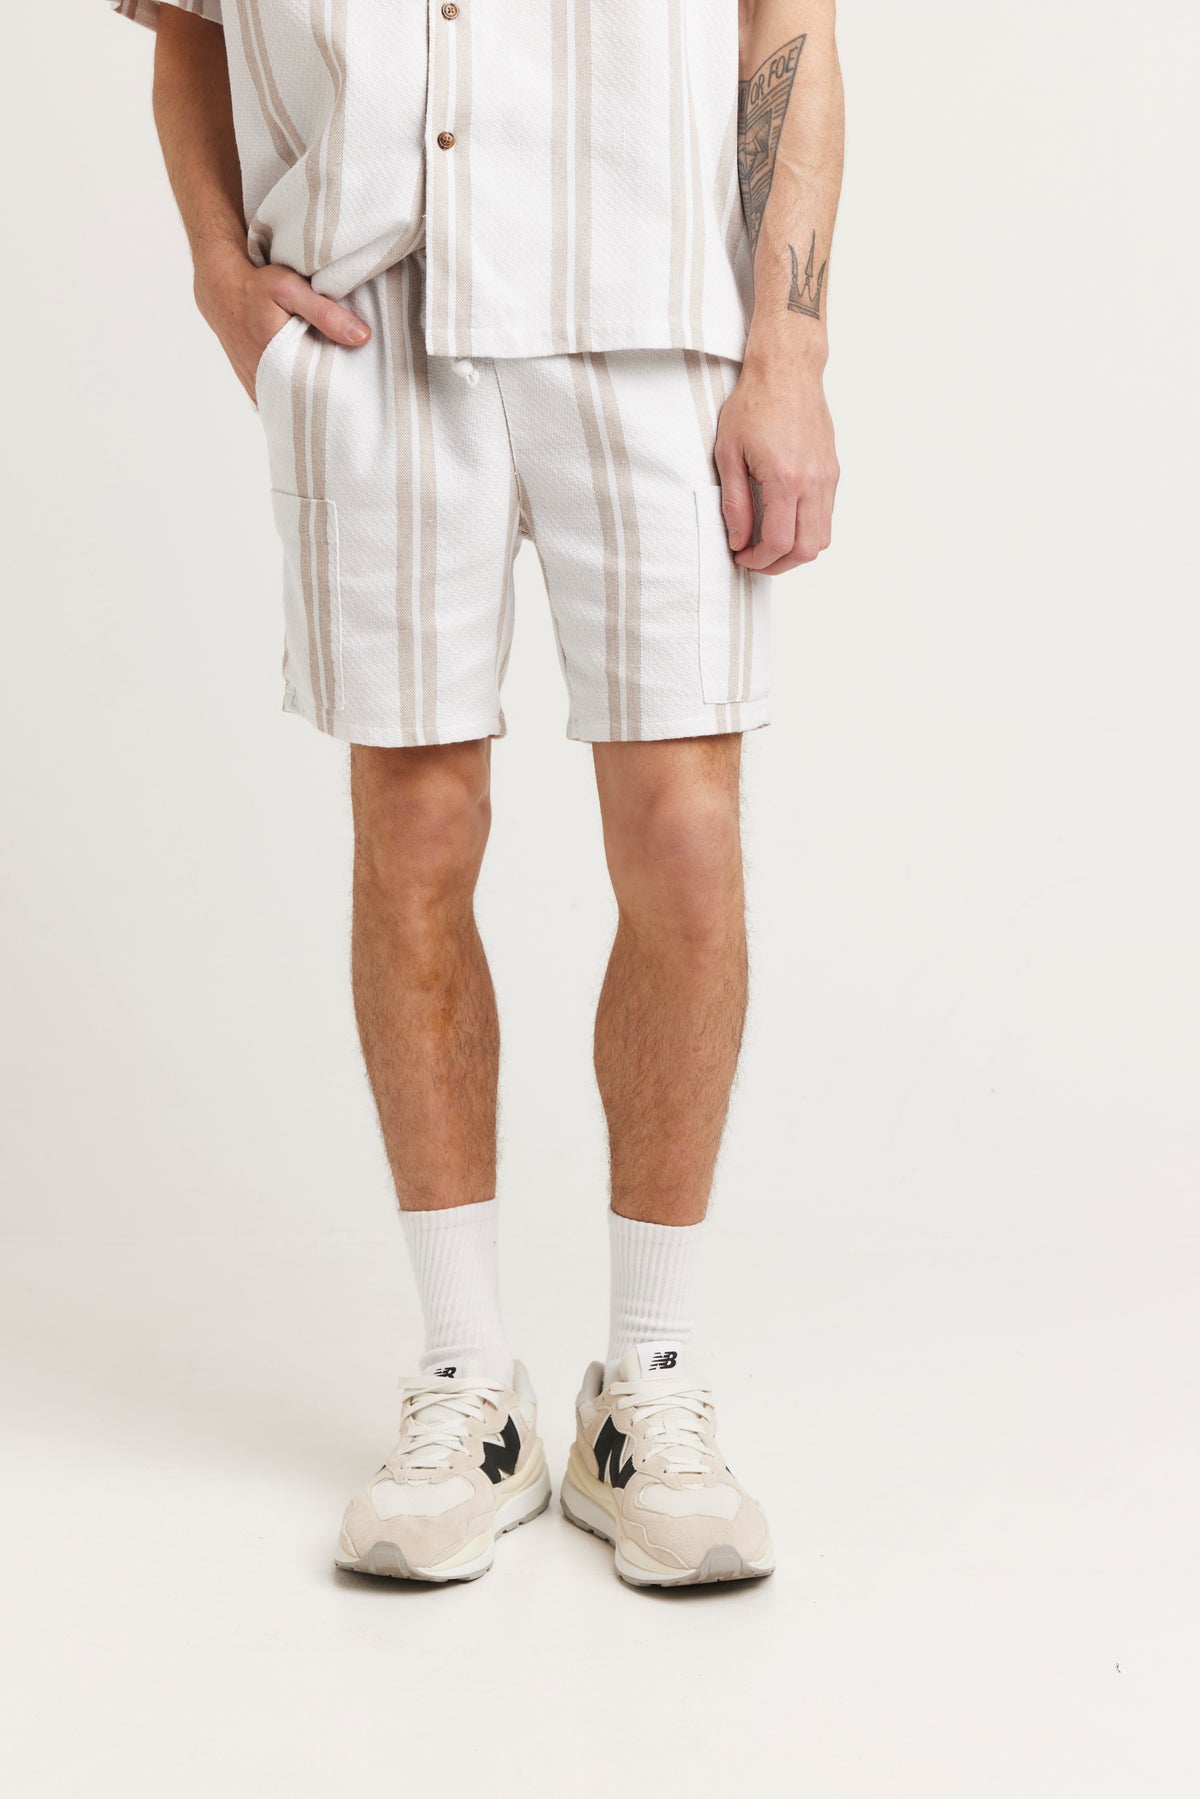 Capri Cotton Short Beige Stripe - FINAL SALE